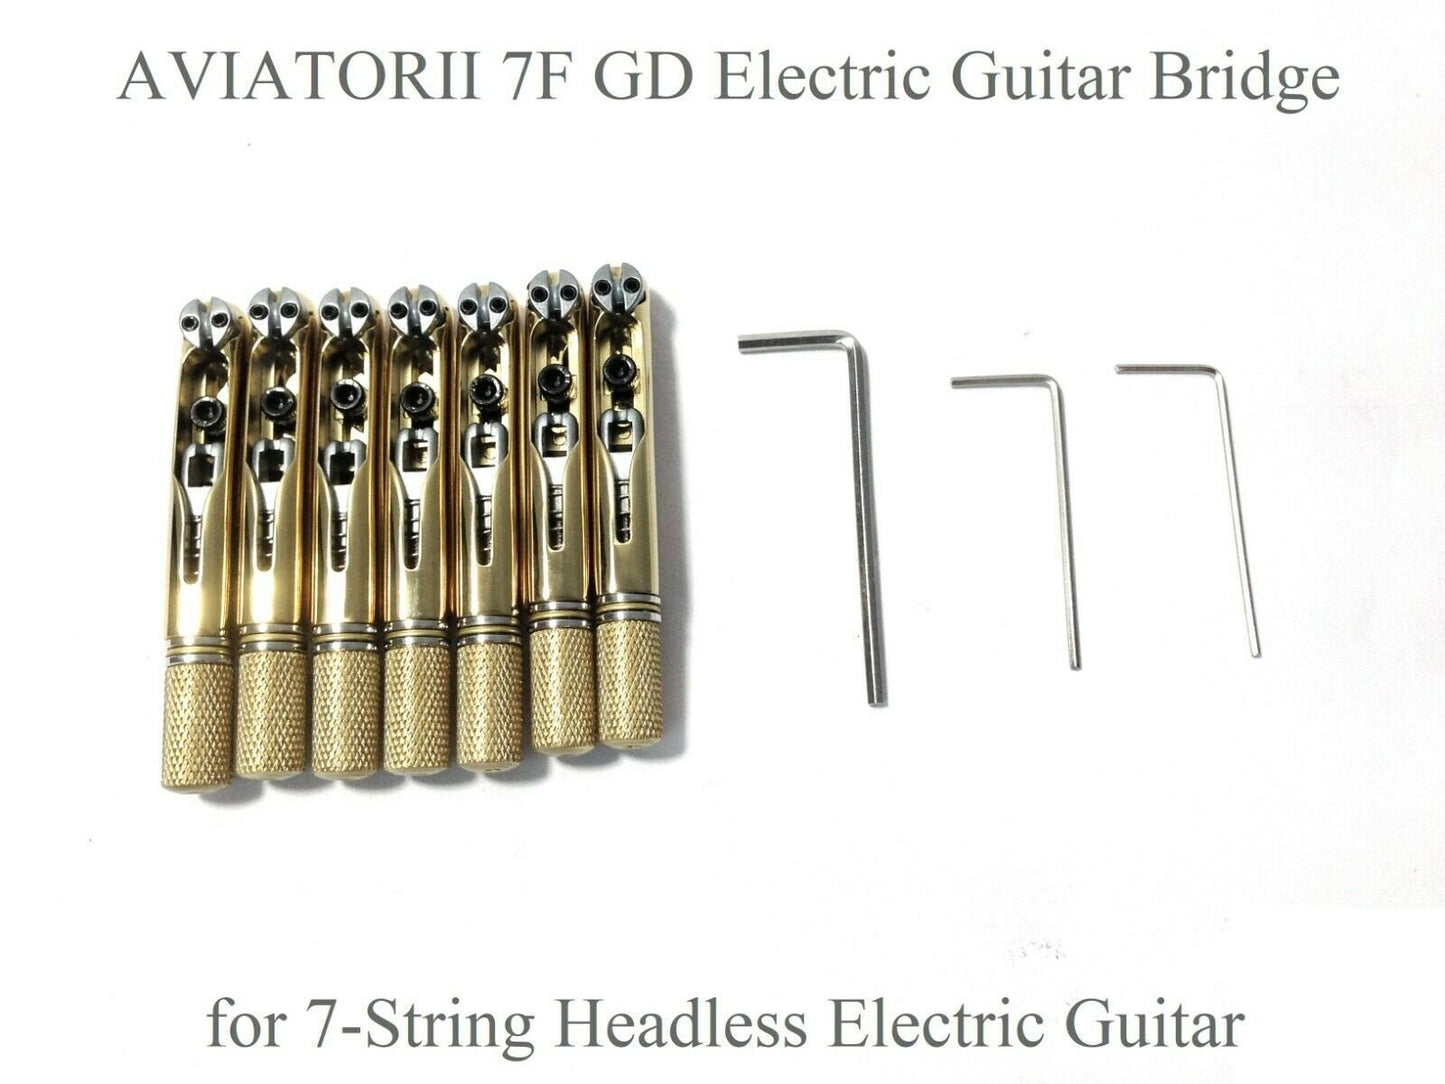 Koloss AVIATOR II 7F GD Bridge for 7-String Headless Electric Guitar, Gold-Tone